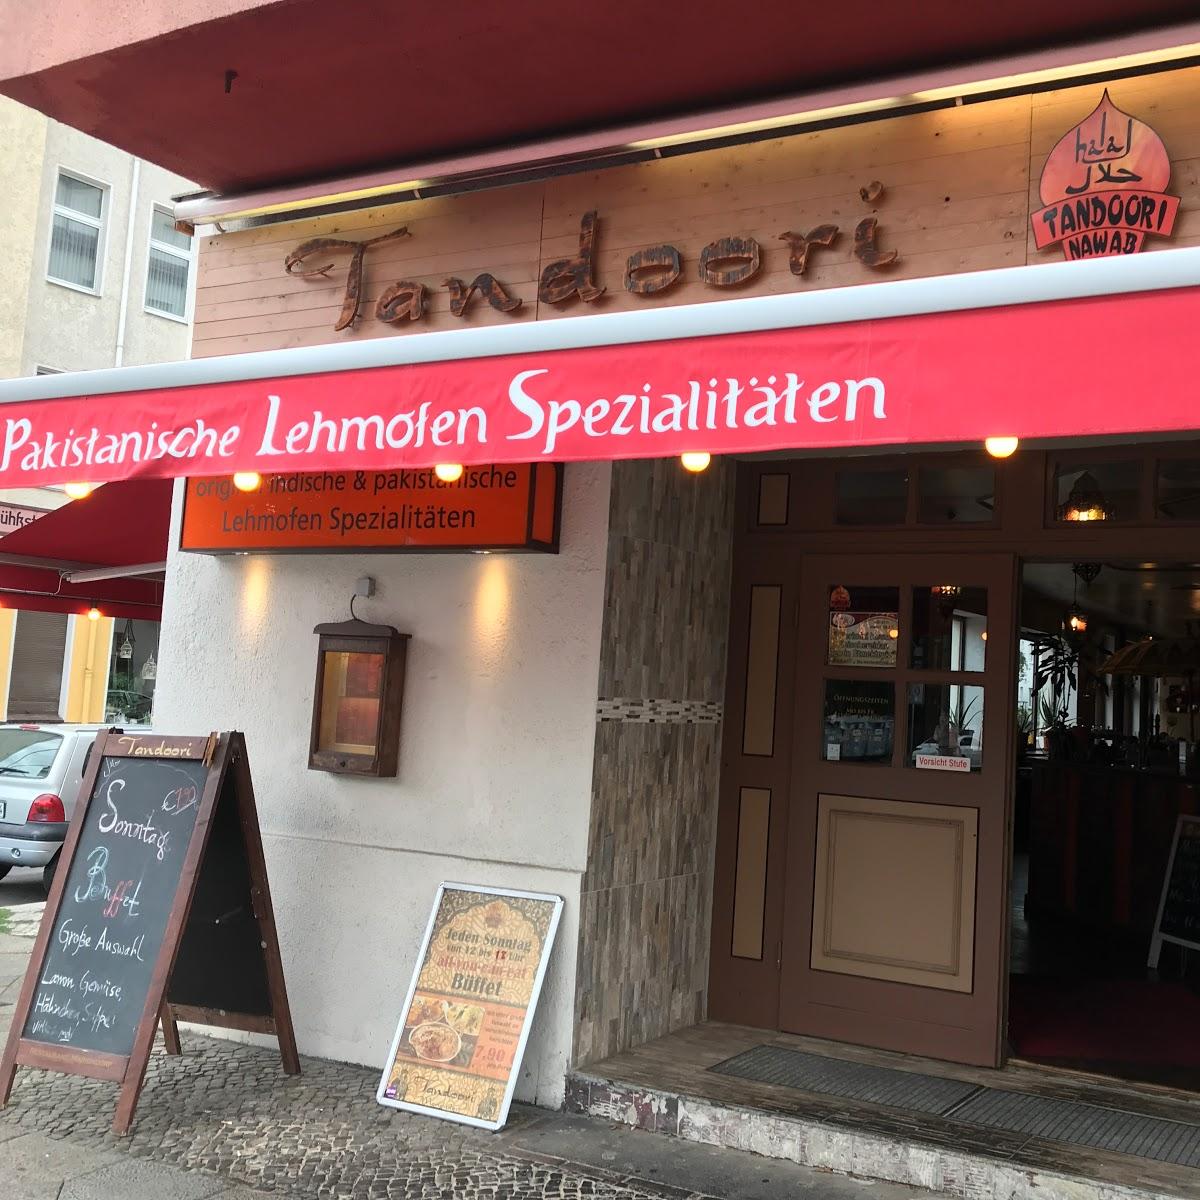 Restaurant "Tandoori Nawab" in  Berlin